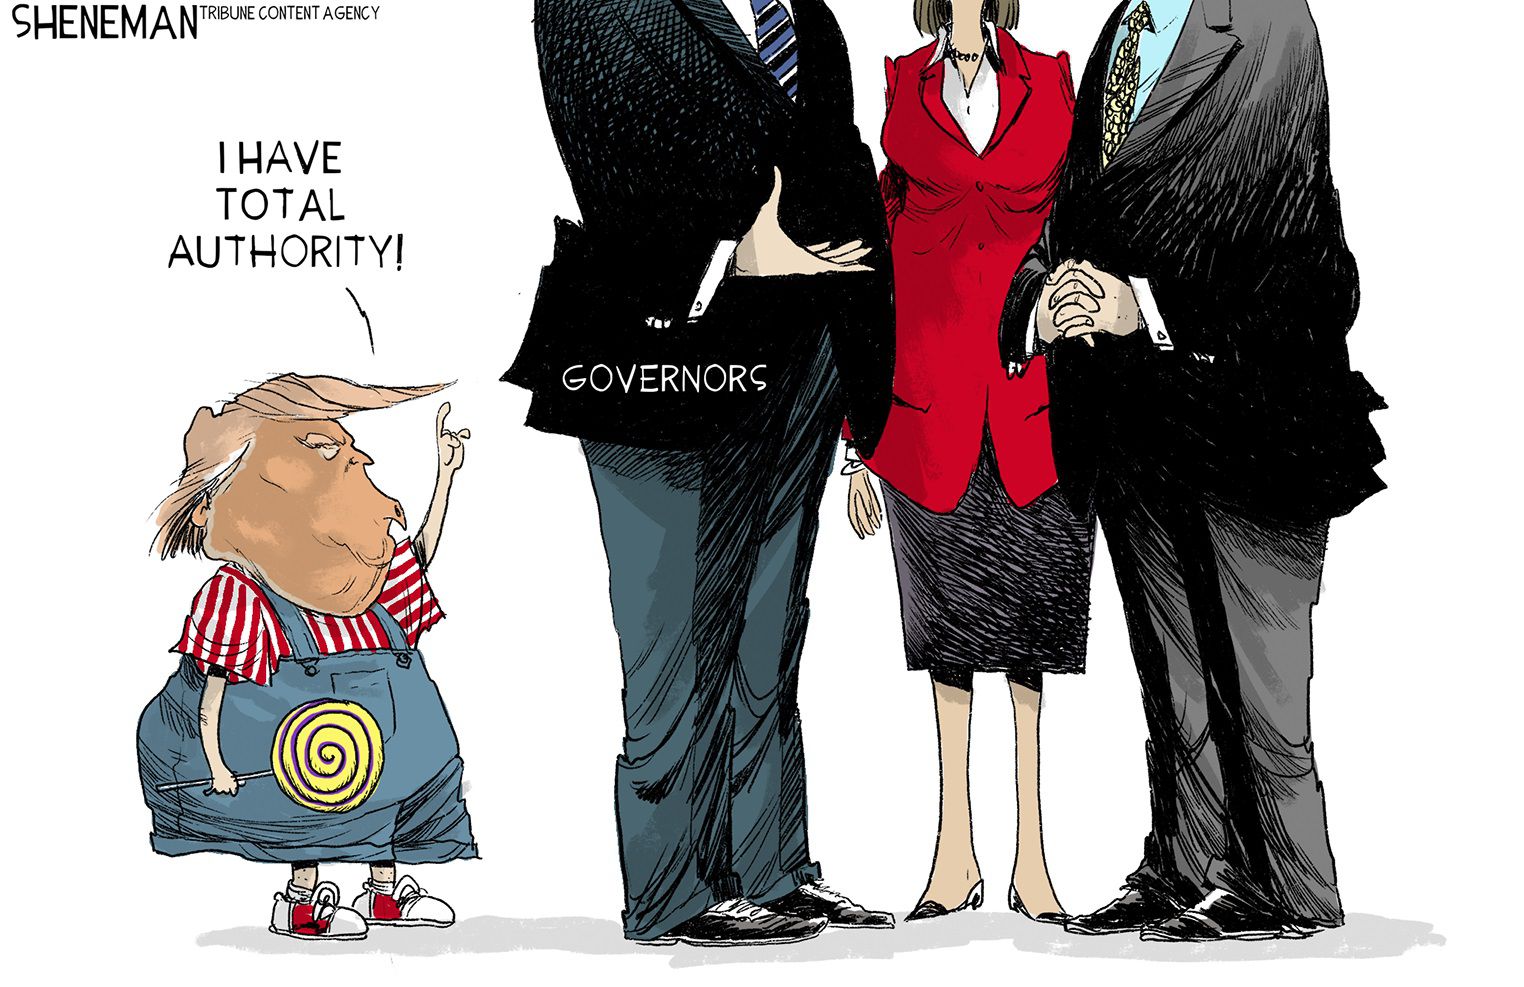 Editorial cartoons for April 19, 2020: Federalism fight, reopening debate,  Obama endorsement 